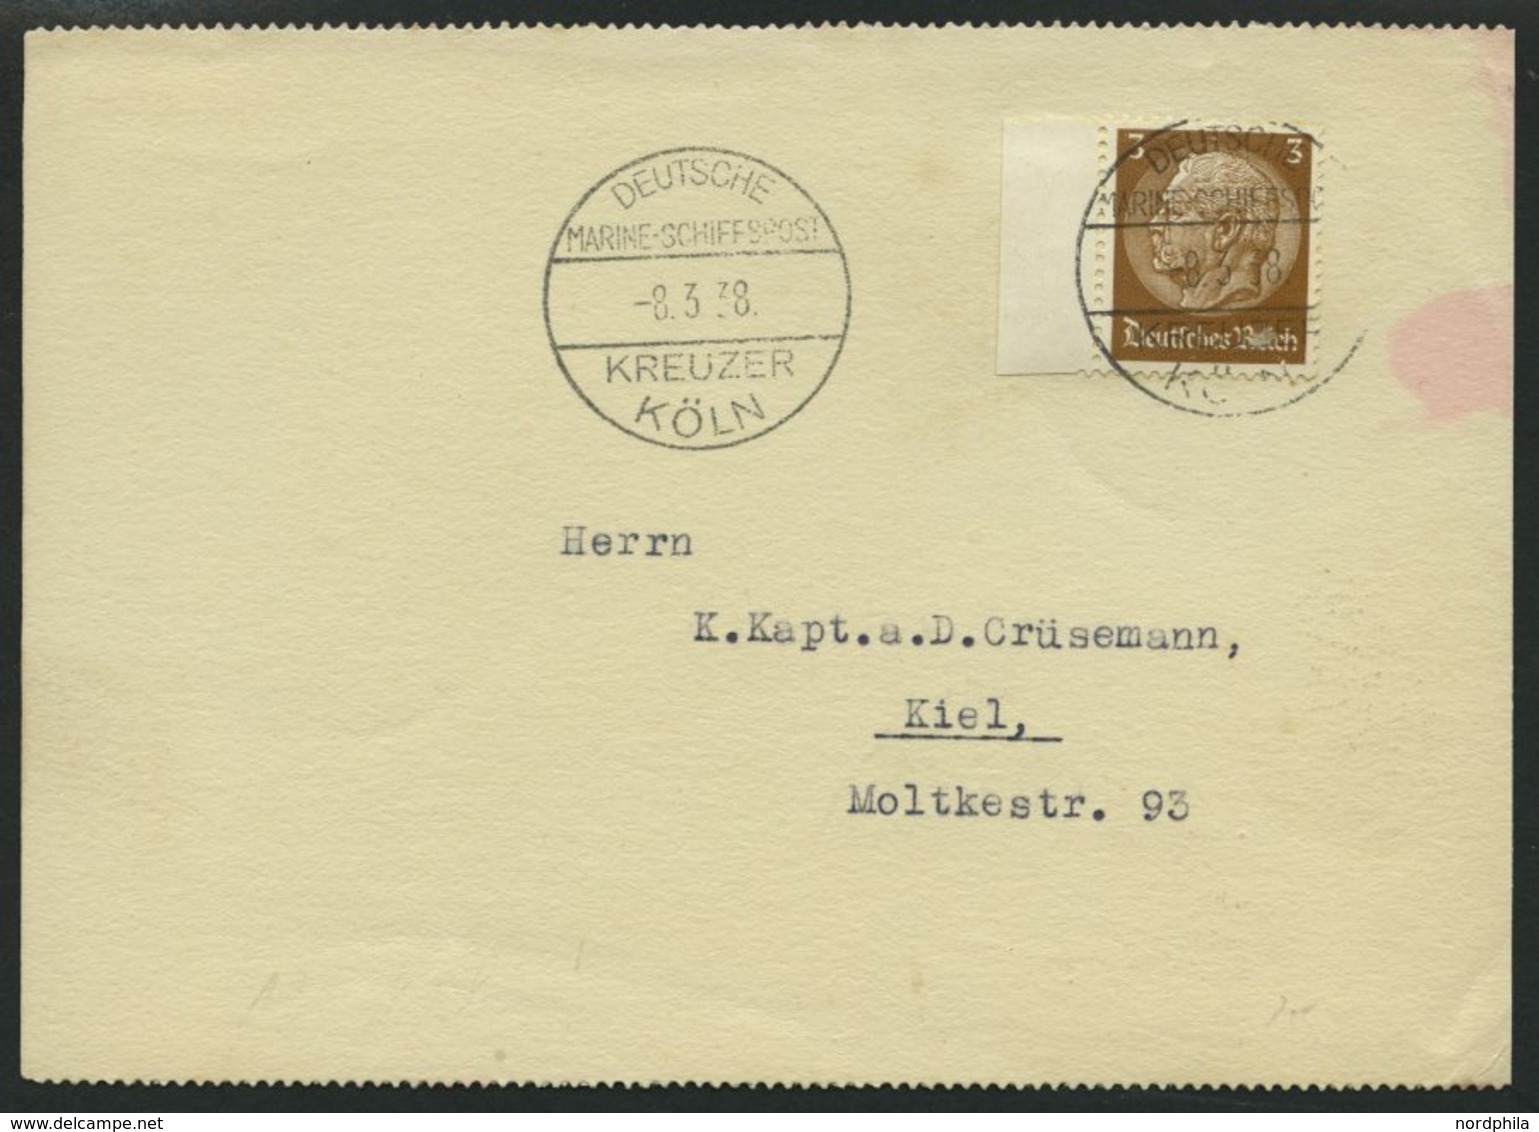 MSP VON 1920 - 1940 DR 513 BRIEF, Kreuzer Köln, 8.3.38, Auf Postkarte (rückseitig Unbeschriftet) An Kapt. A.D. Crüsemann - Marittimi